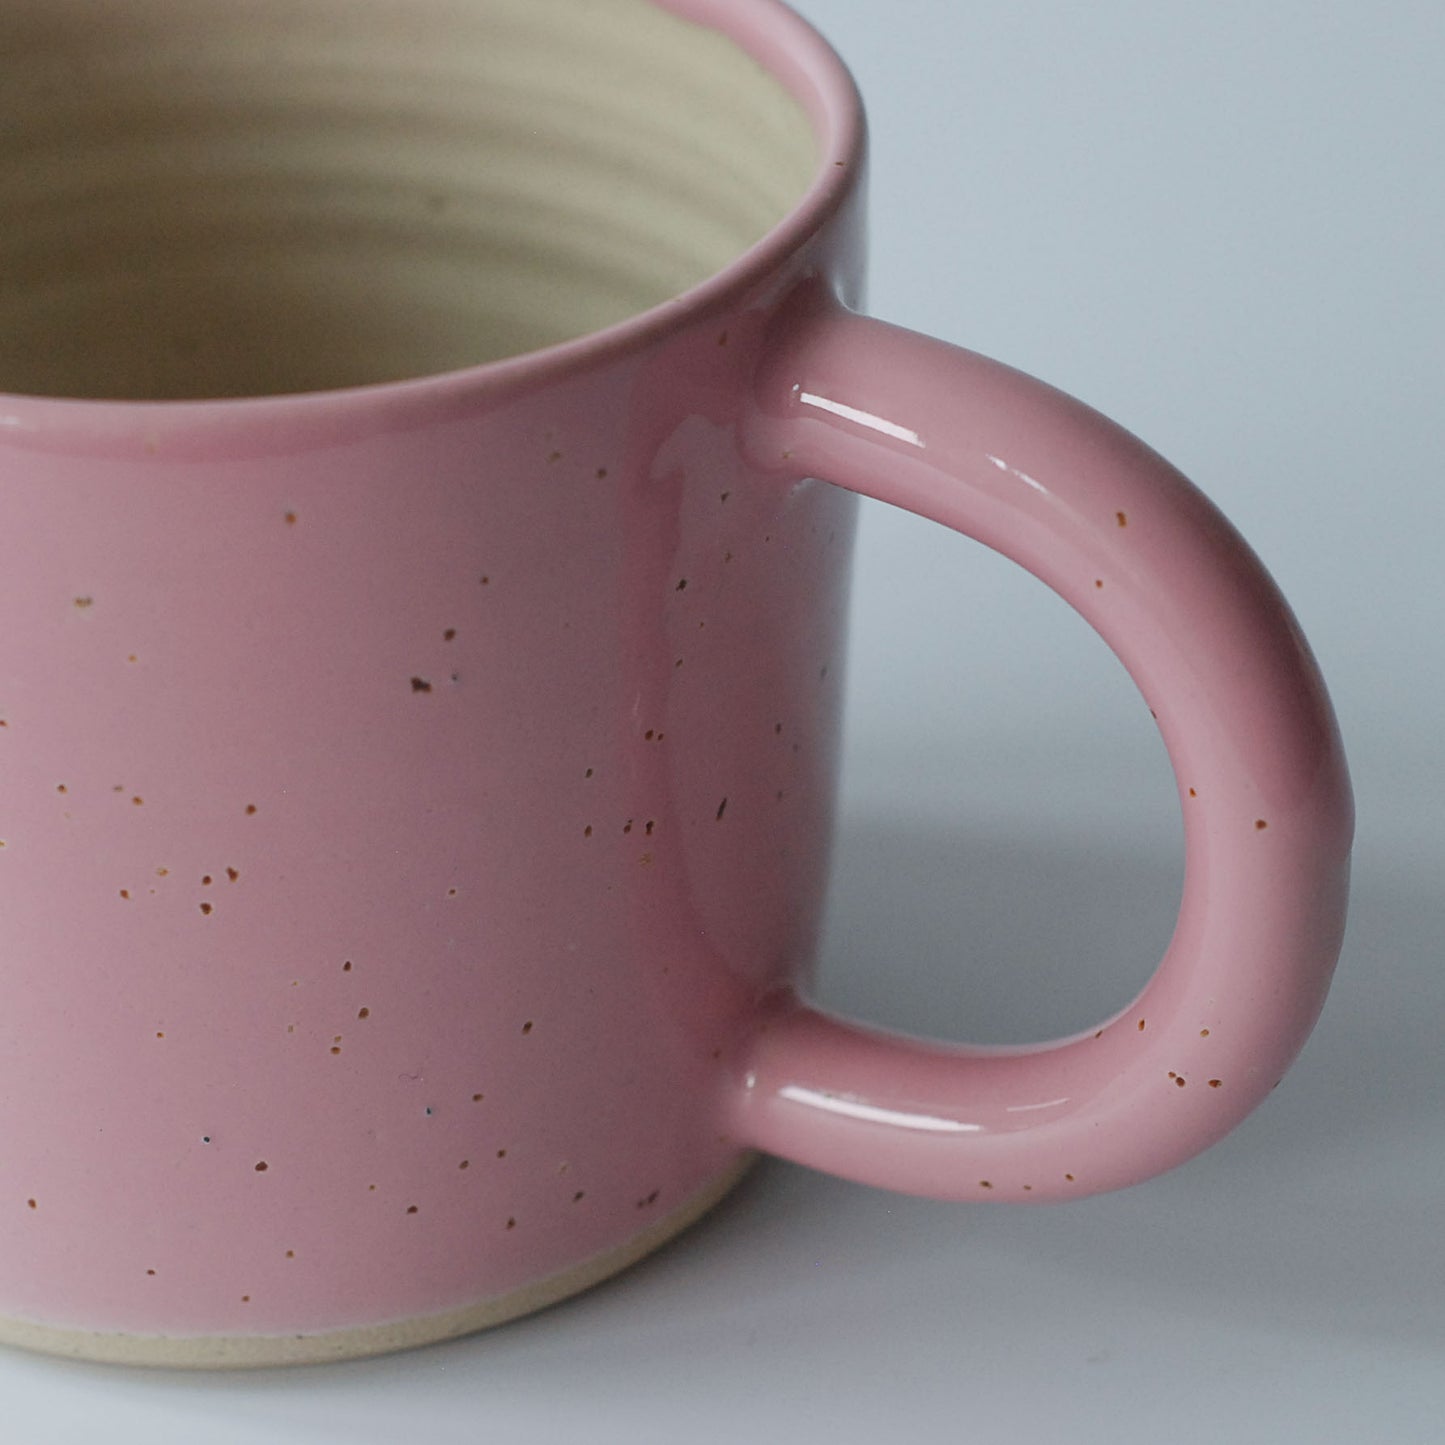 Mug Pink I